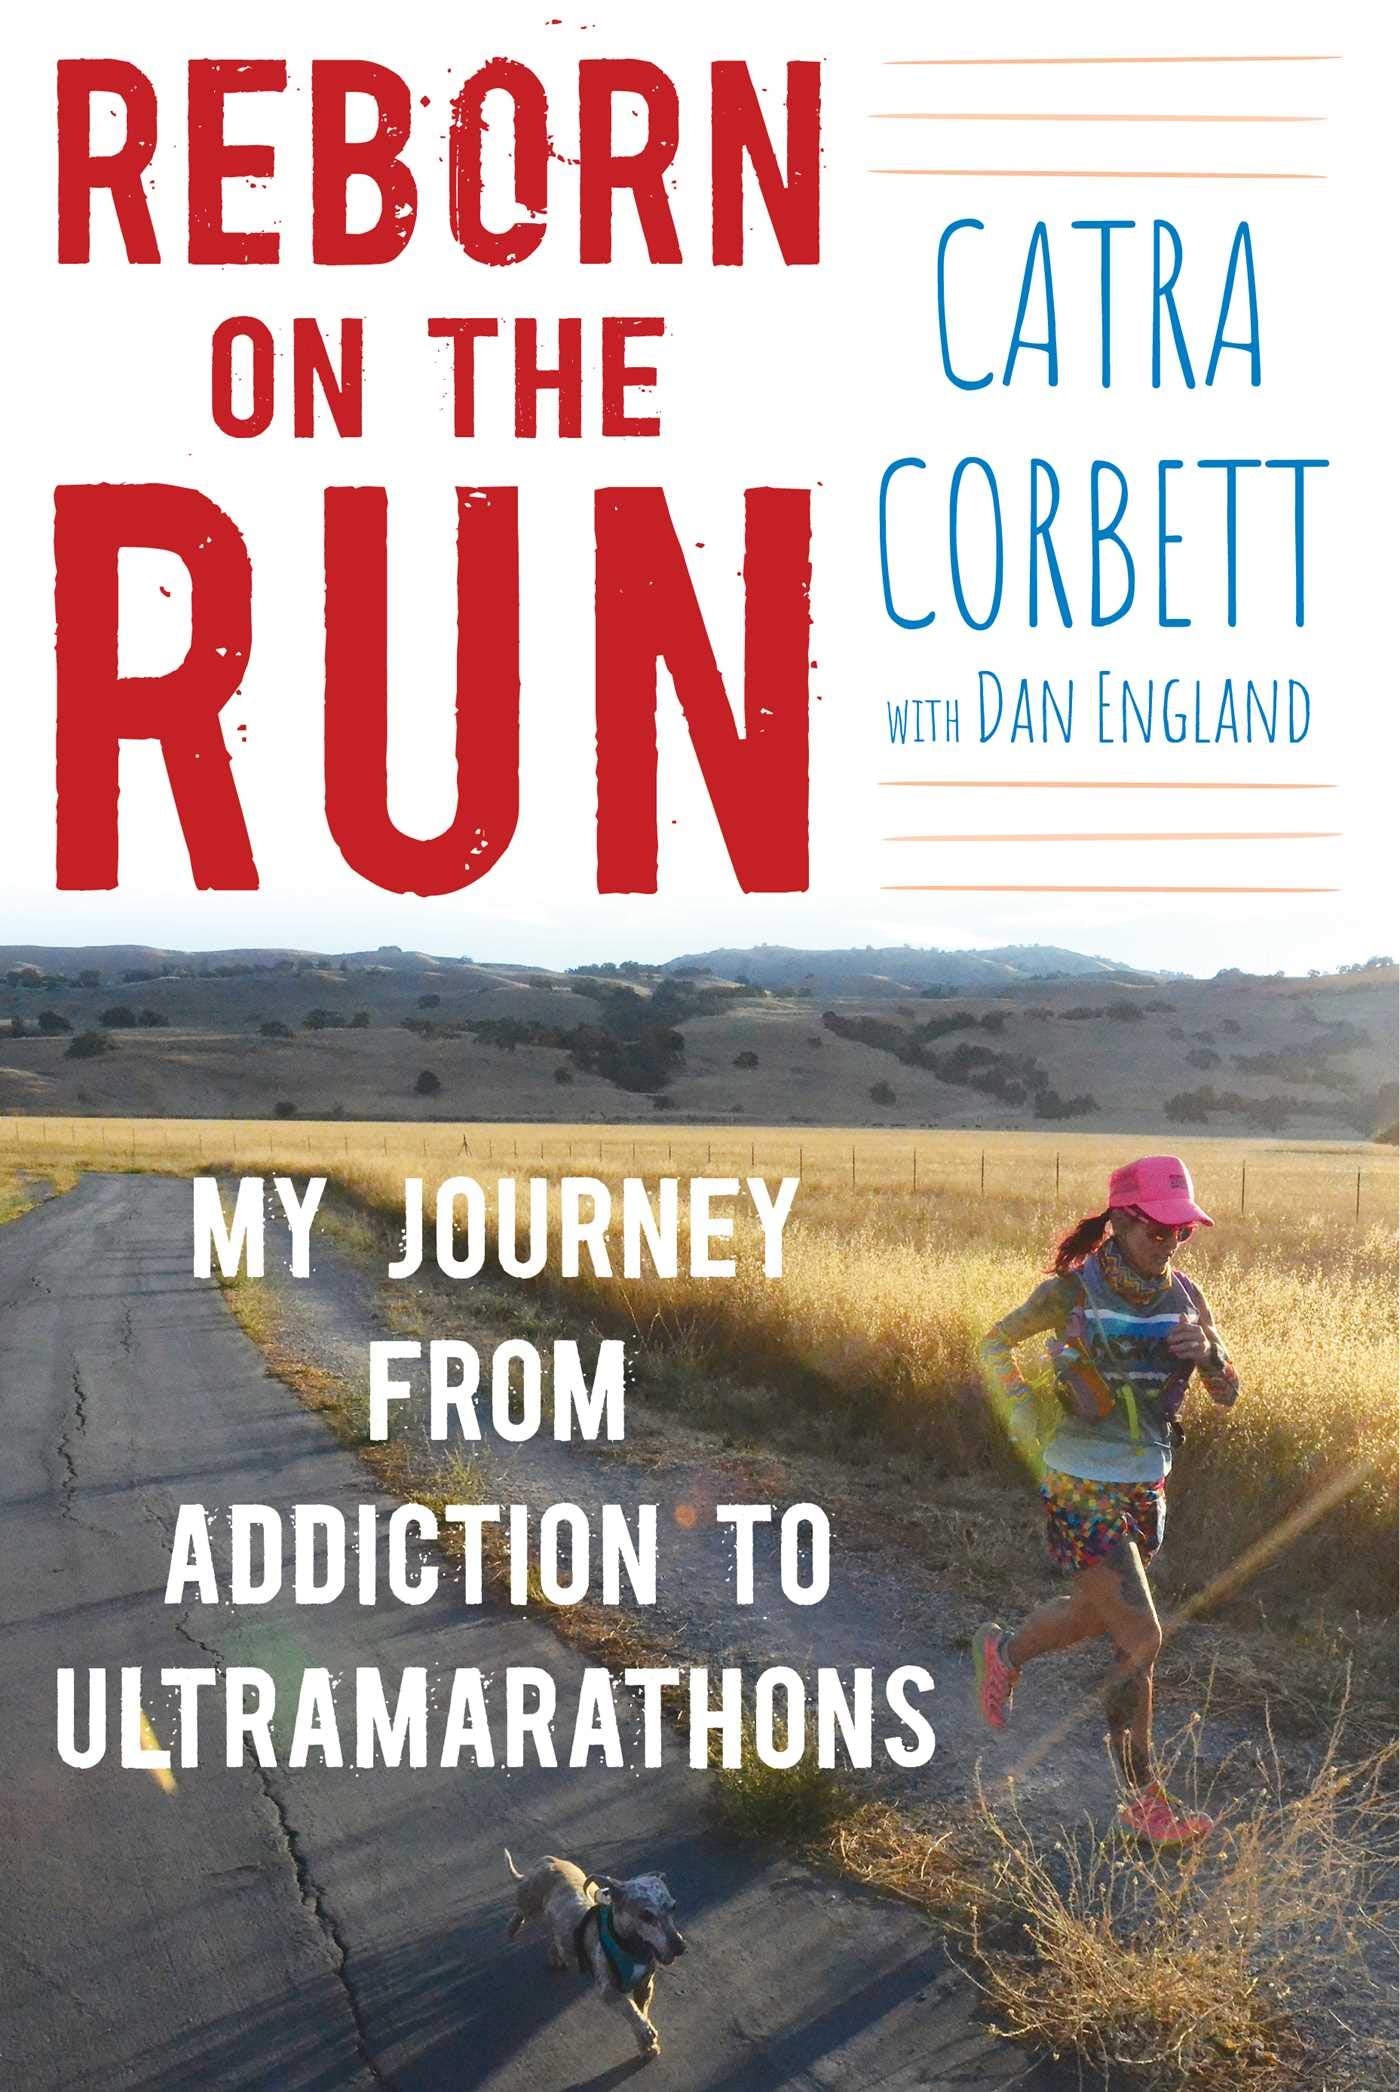 Reborn on the Run: My Journey from Addiction to Ultramarathons by Catra Corbett